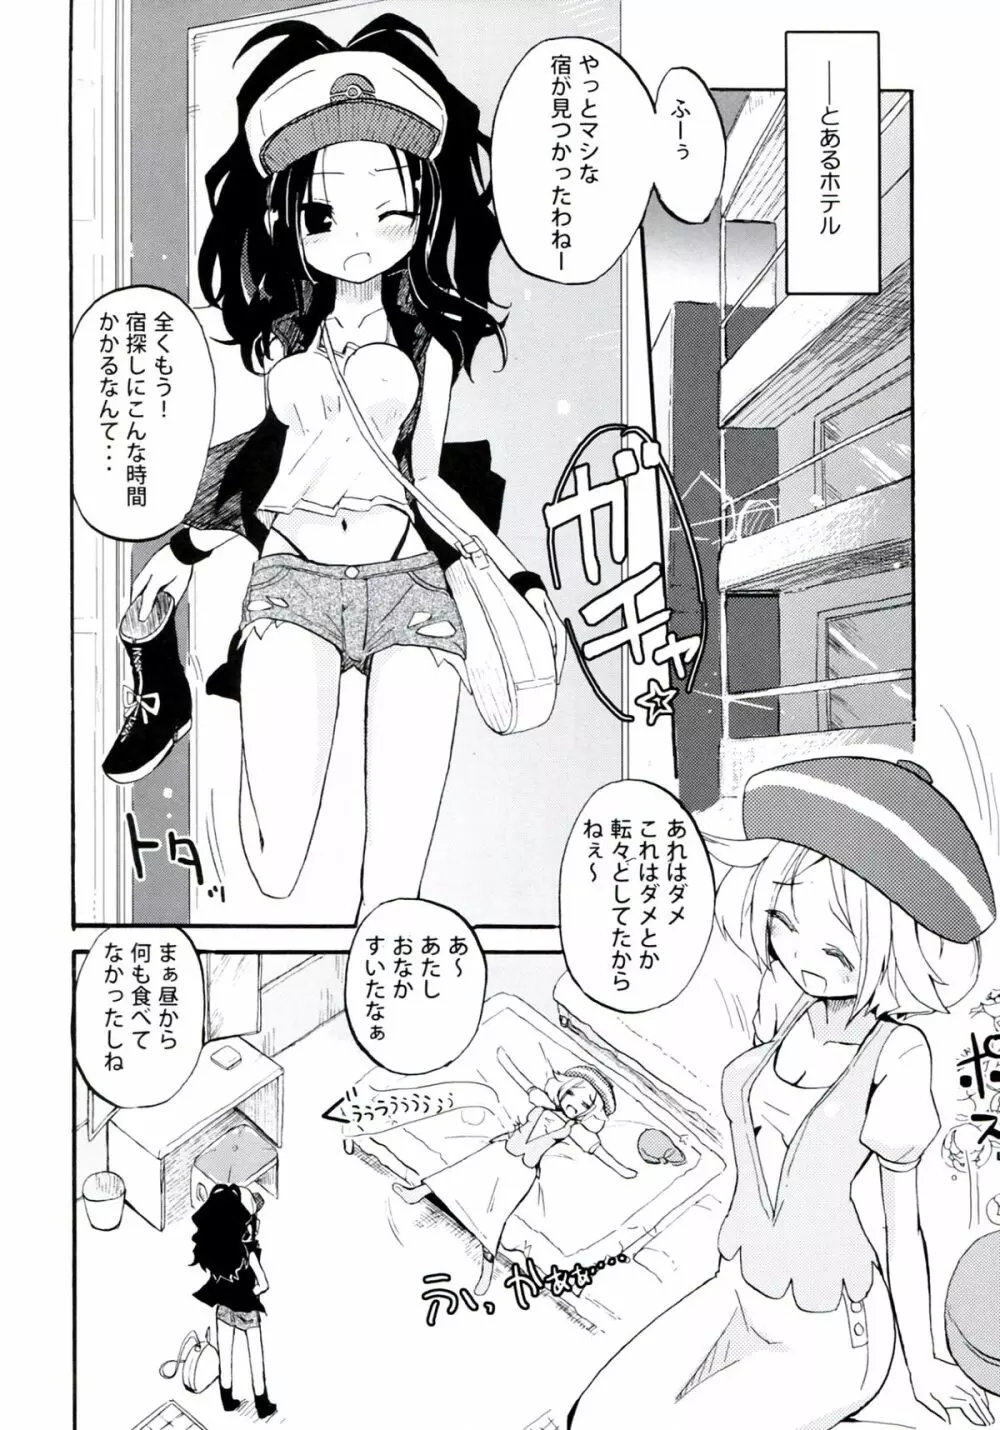 Homuraya Milk ★ Collection 2 - page28